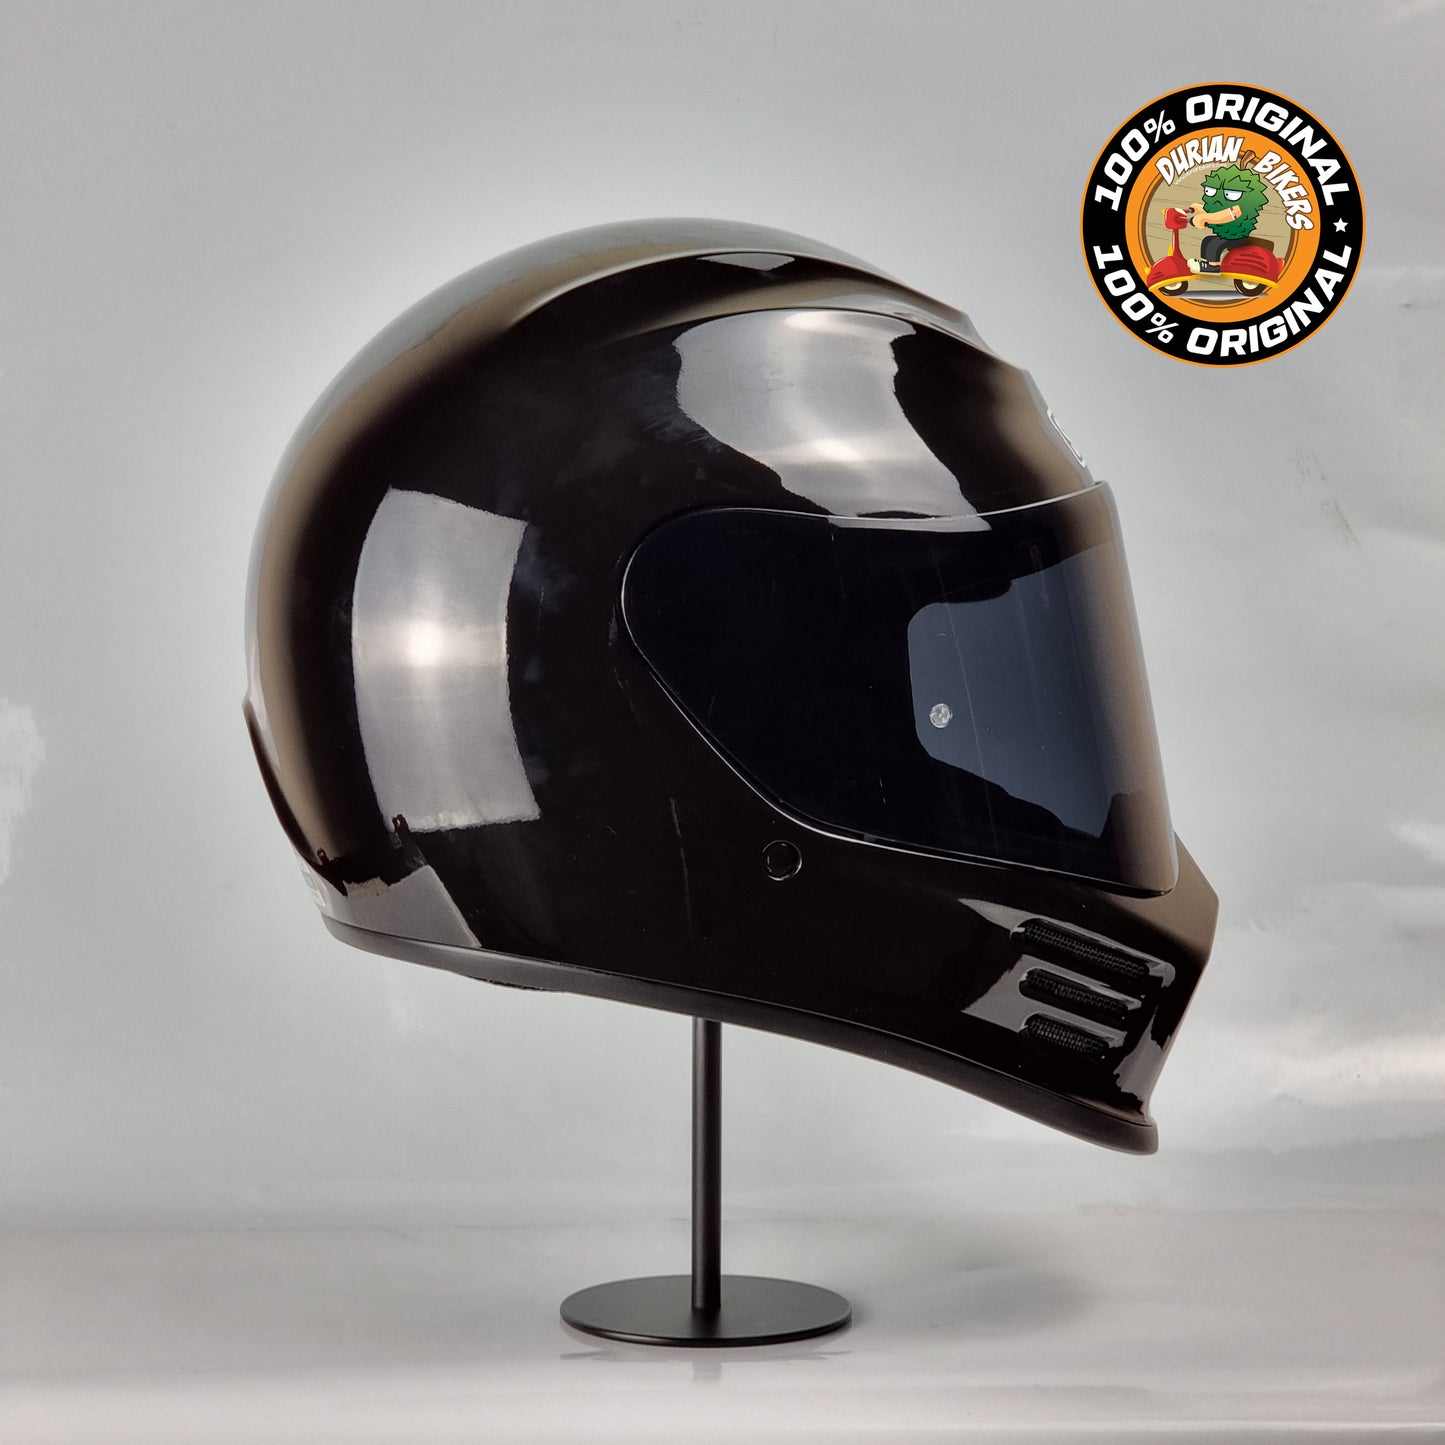 Simpson Helmet Speed Bandit (Gloss Black)